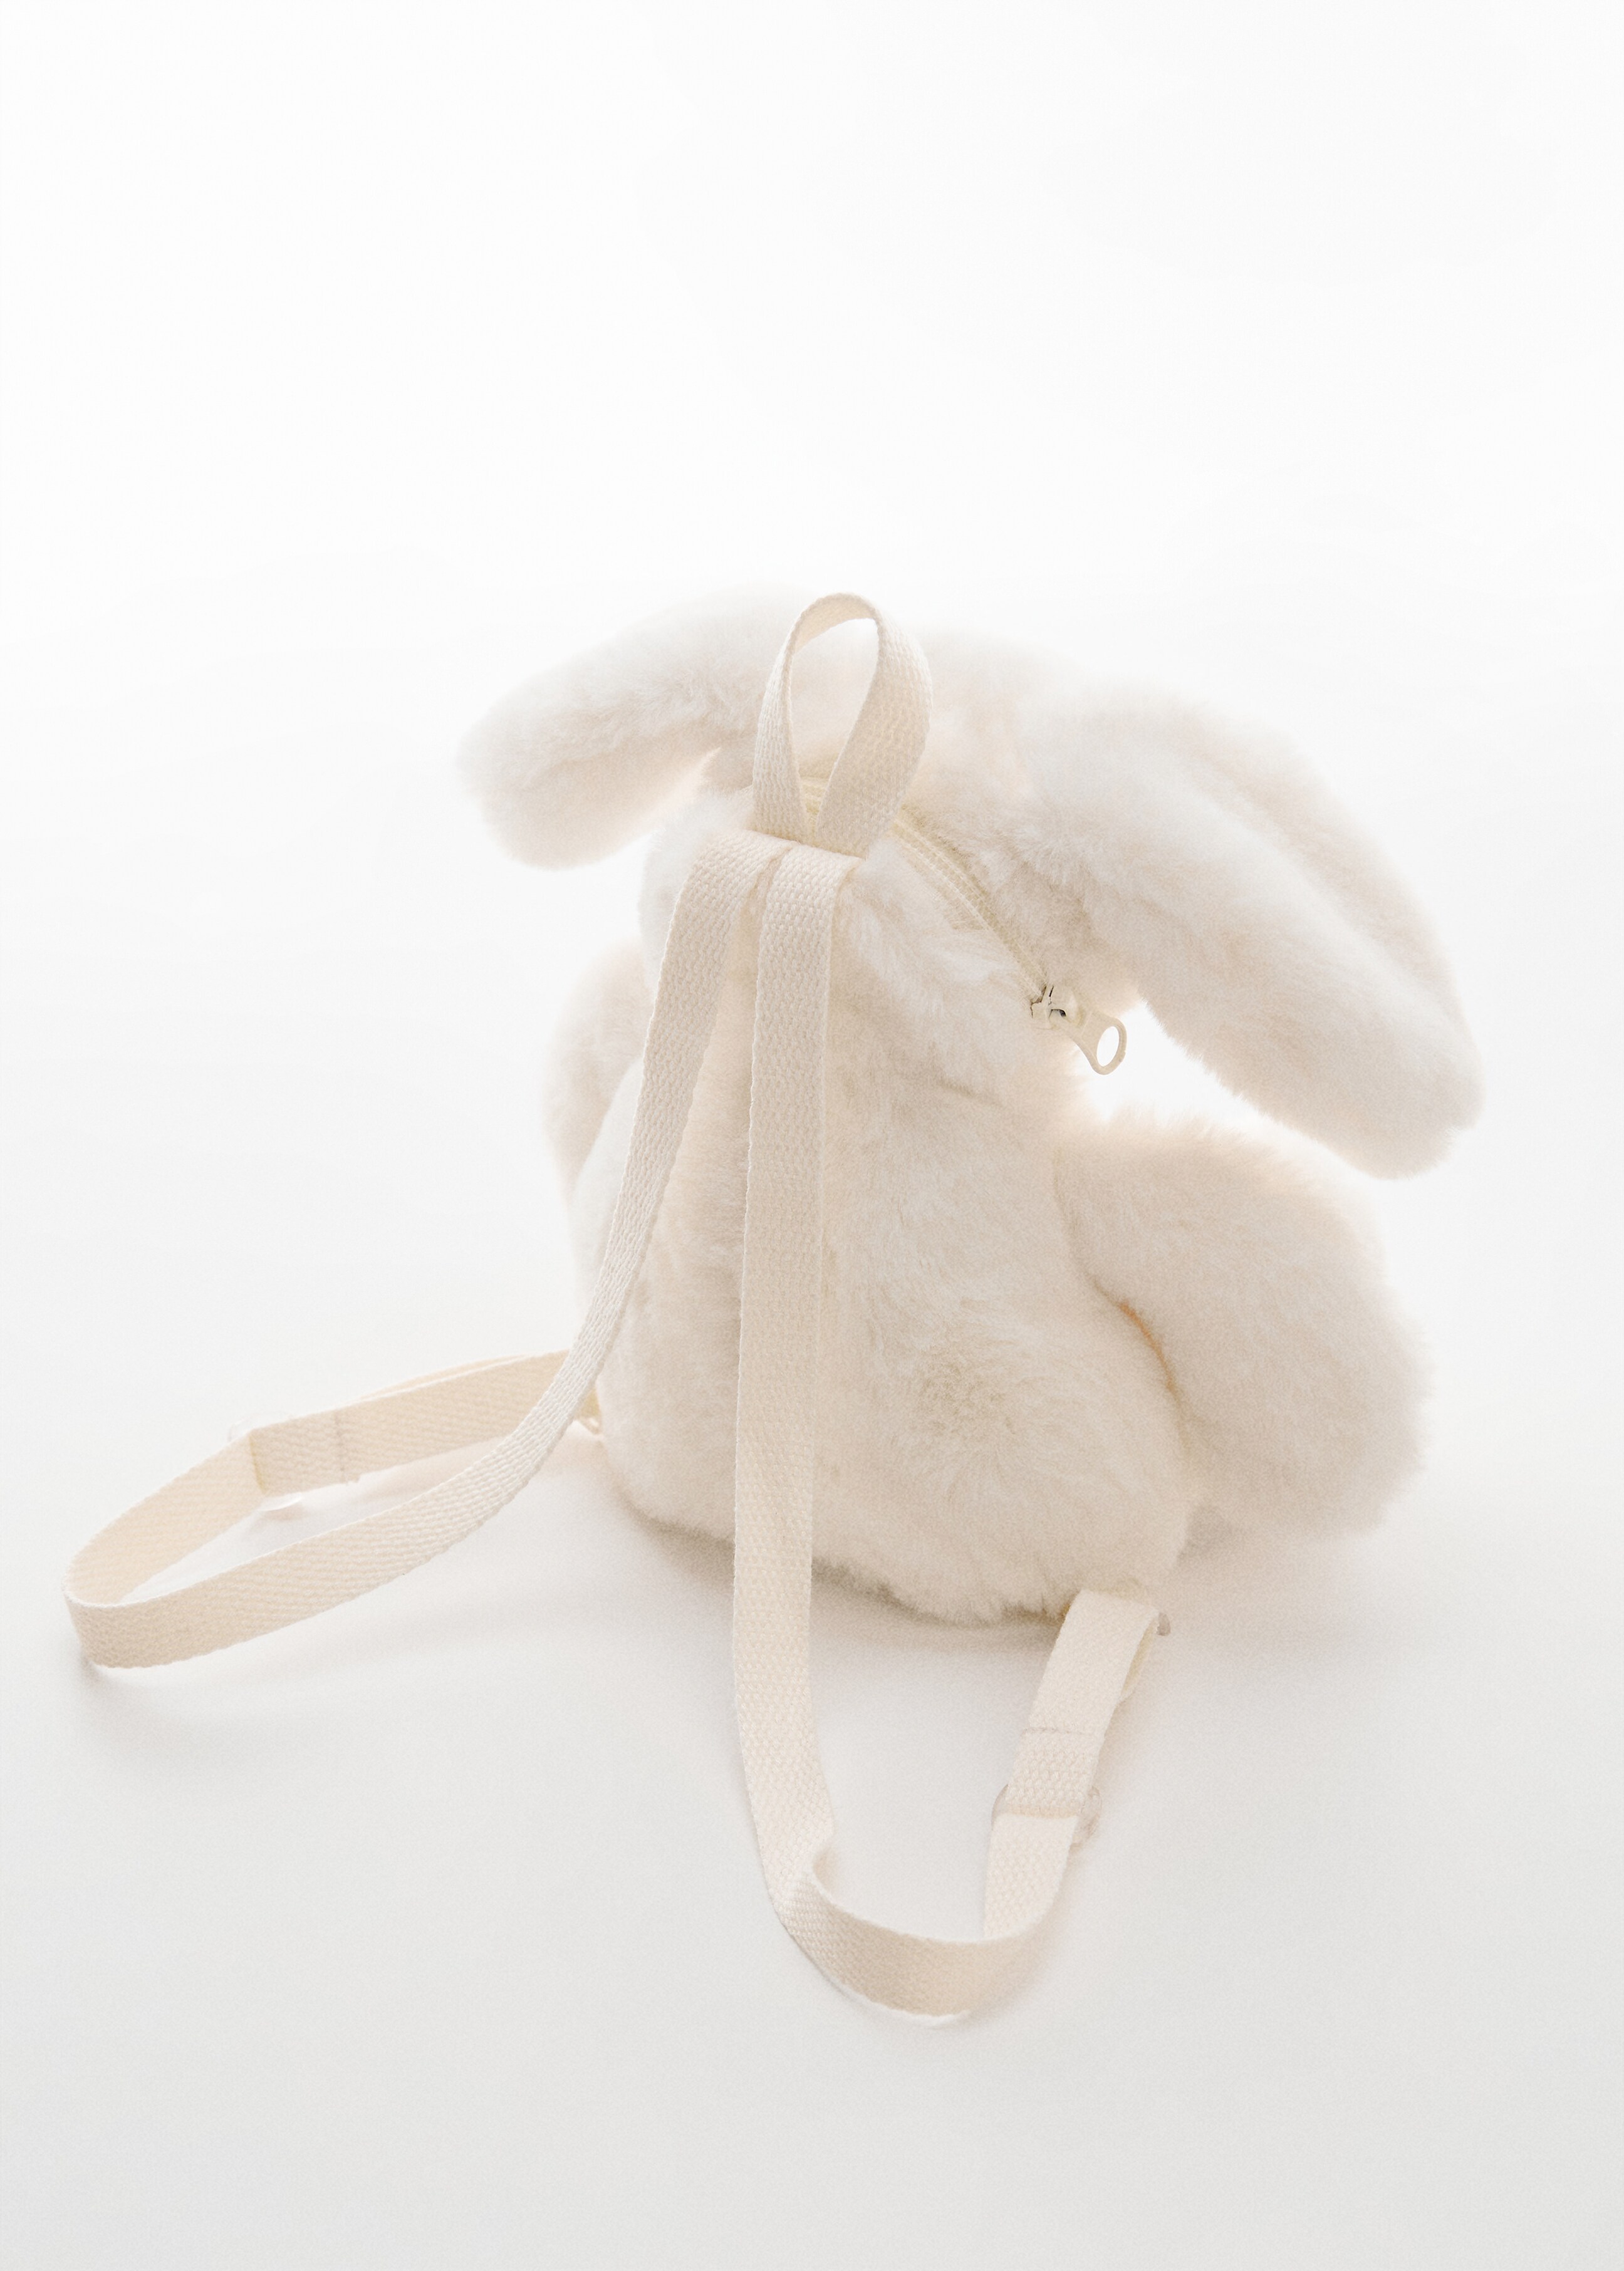 Bunny backpack - Medium plane